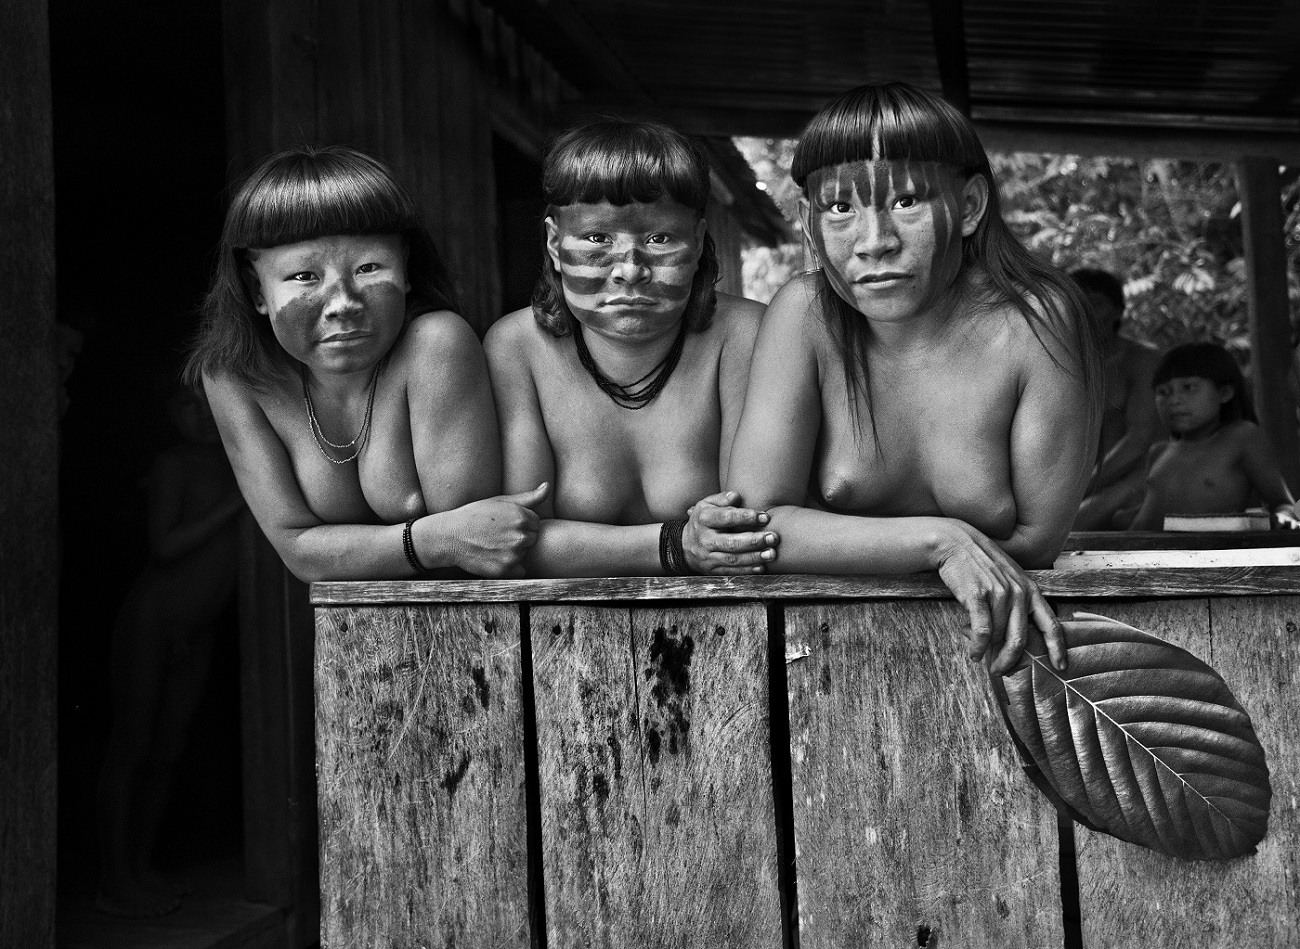 Mujeres jóvenes suruwahá, estado de Amazonas, Brasil, 2017. © SEBASTIÃO SALGADO